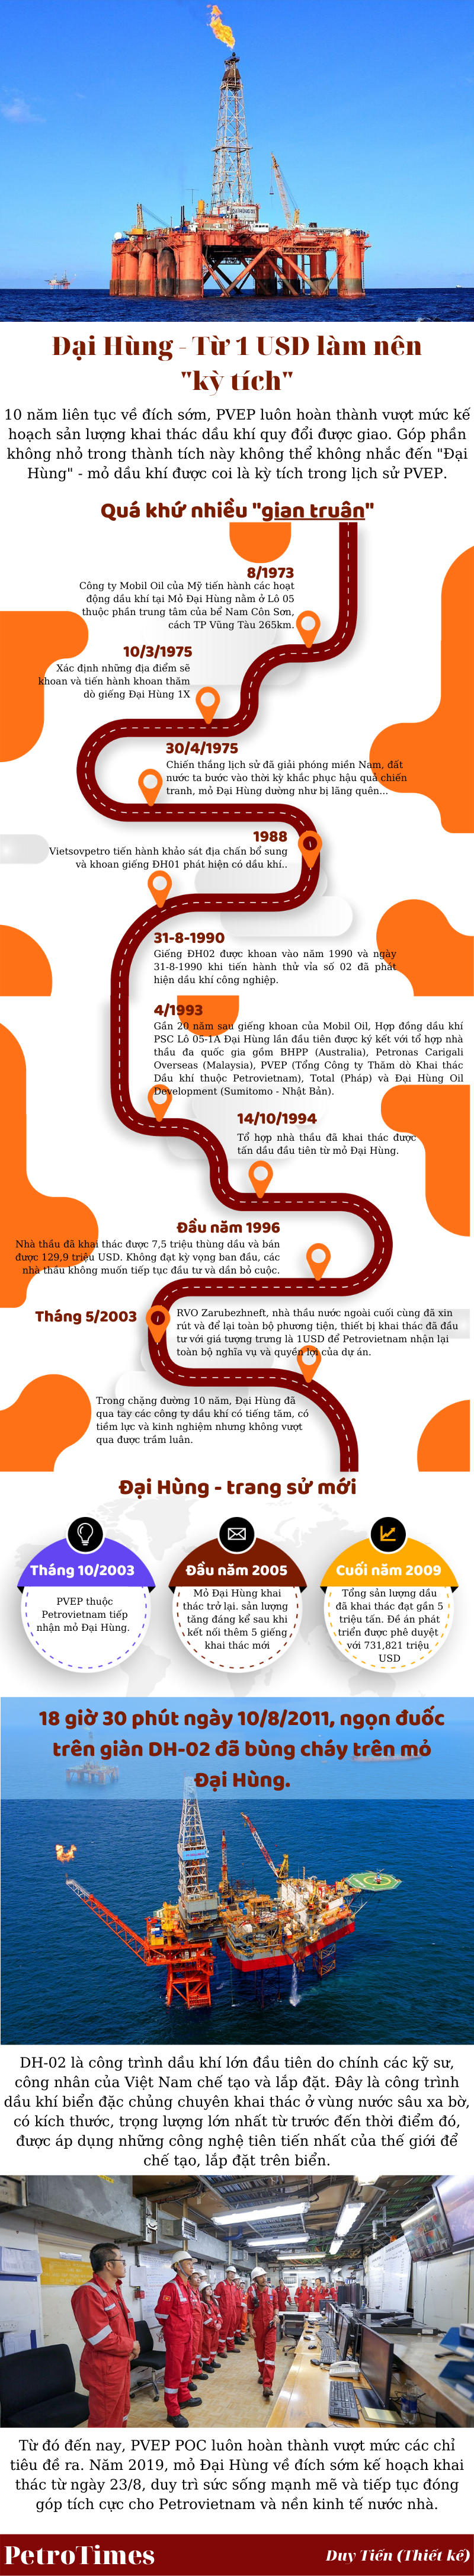 infographic dai hung tu 1 usd lam nen ky tich